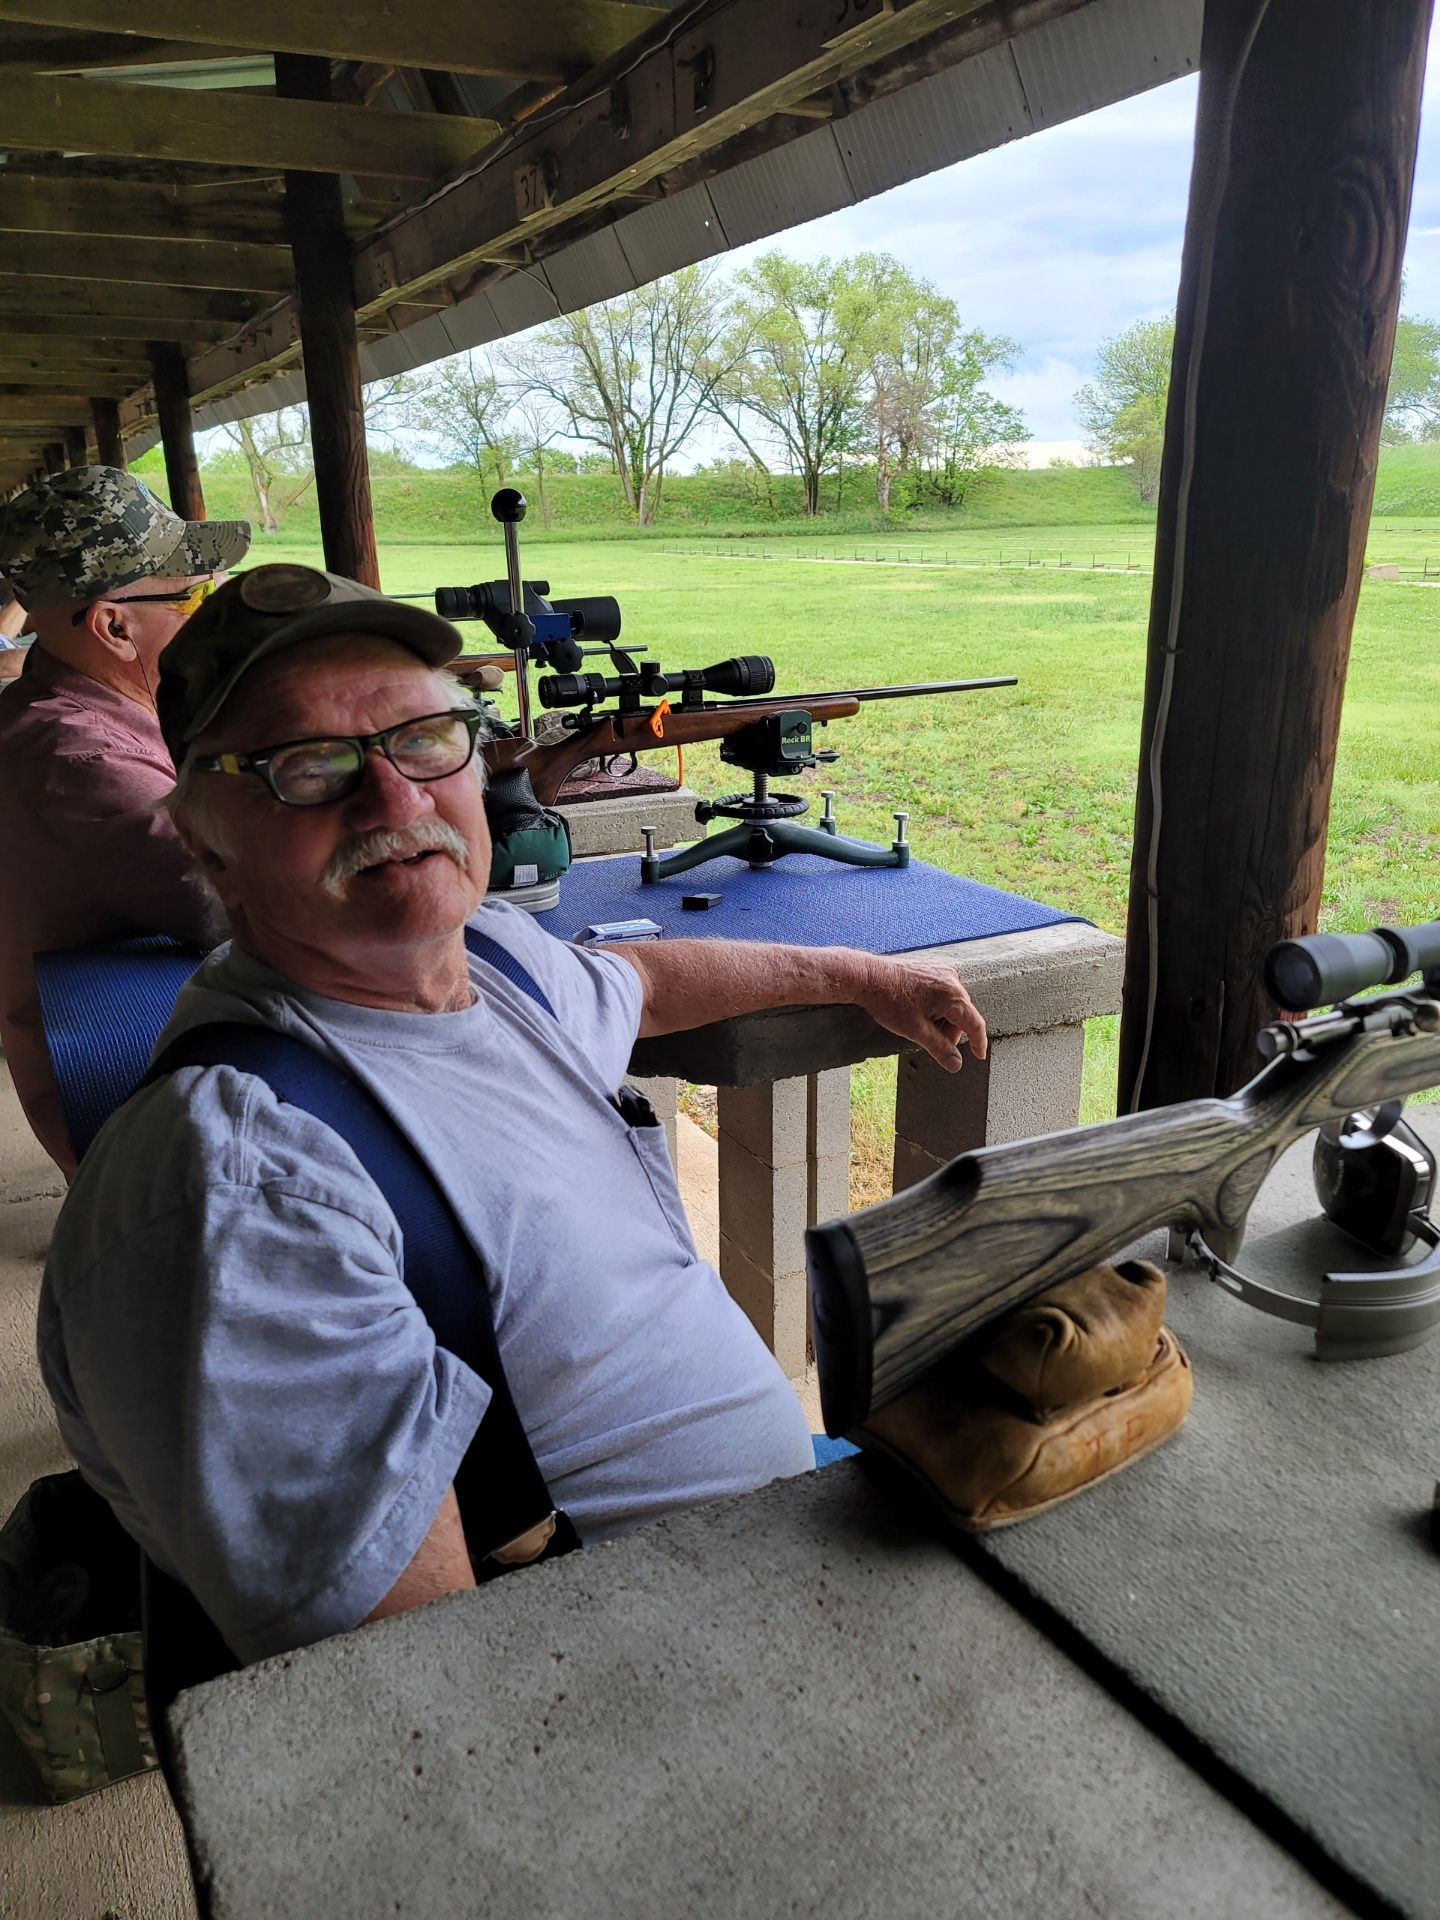 man sitting in gray shirt and glasses at gun range rifle table